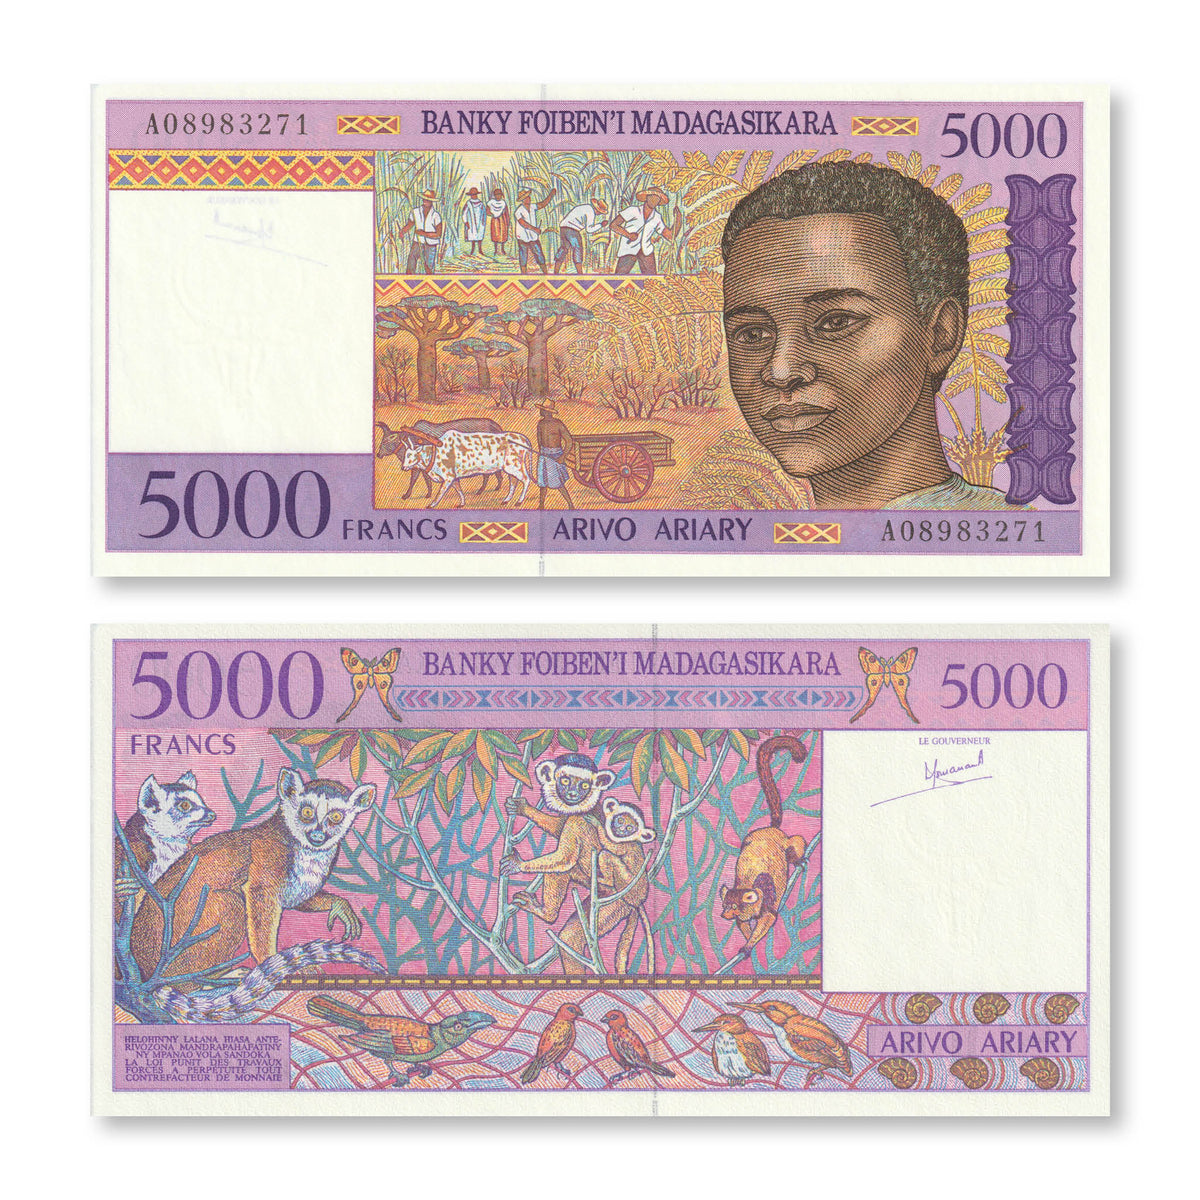 Madagascar 5000 Francs, 1995, B314a, P78a, UNC - Robert's World Money - World Banknotes